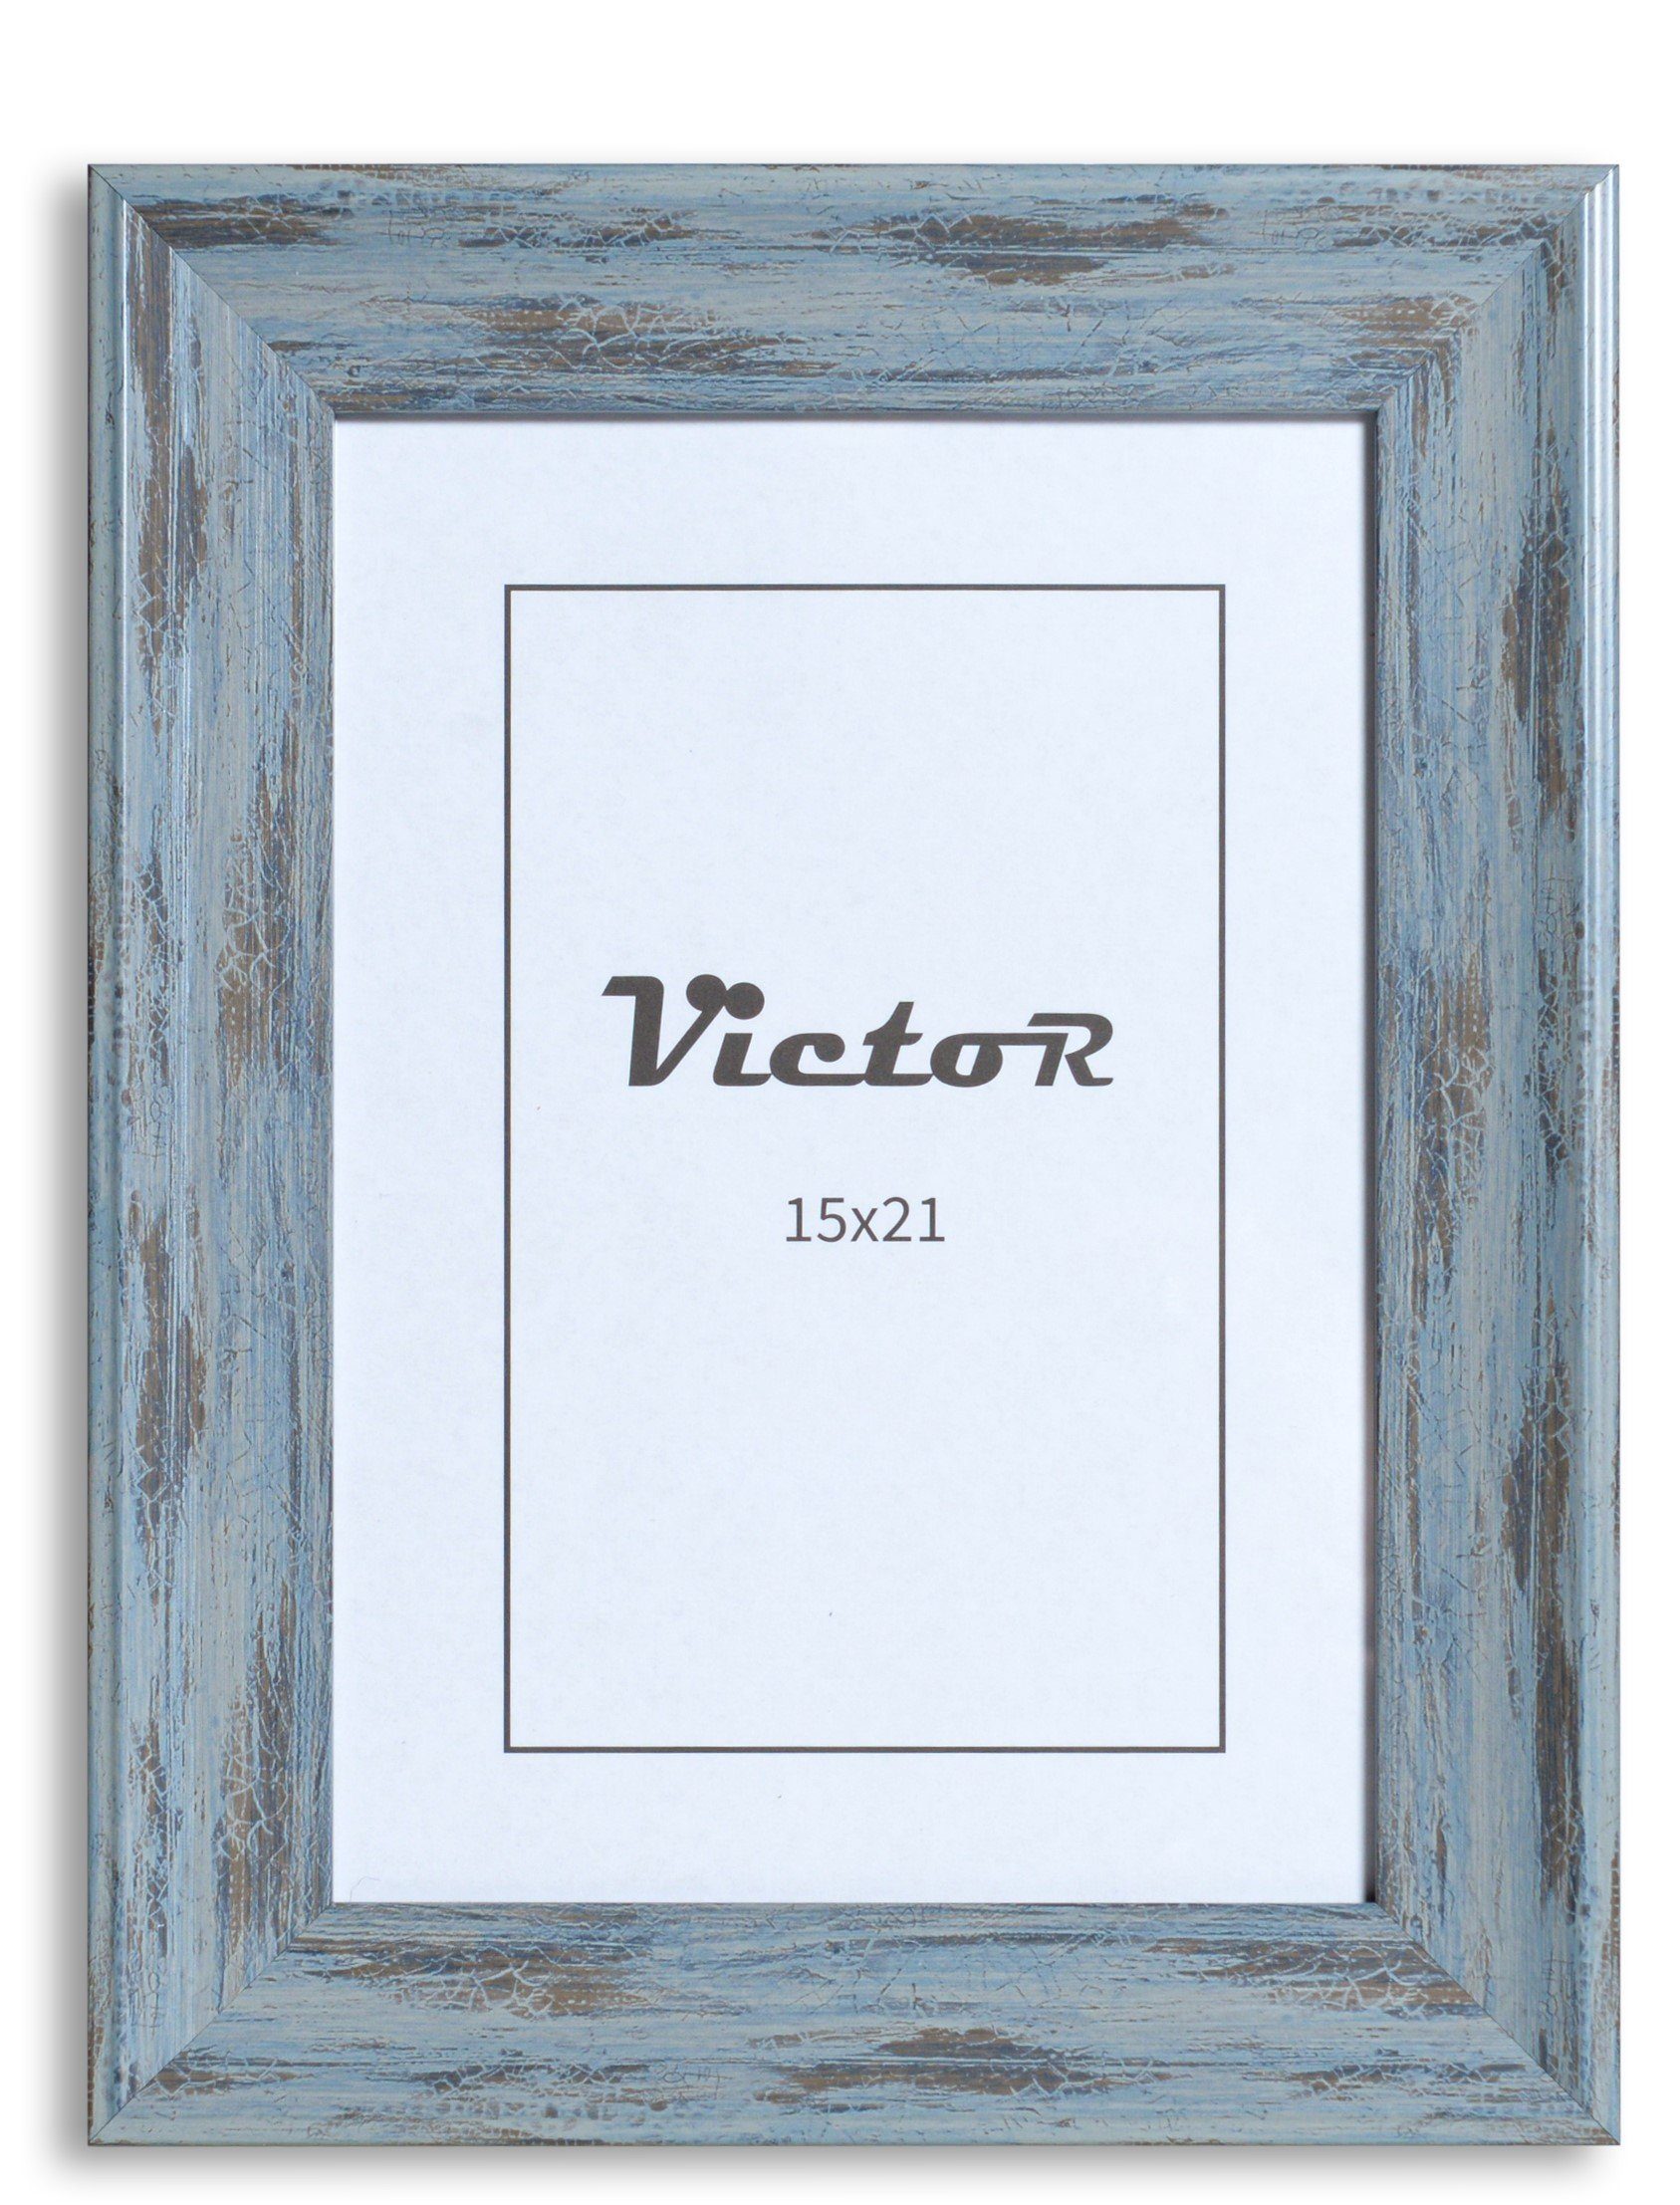 cm Vincent, Bilderrahmen 15x21 Bilderrahmen Victor Vintage (Zenith) A5, Landhaus Grau Bilderrahmen